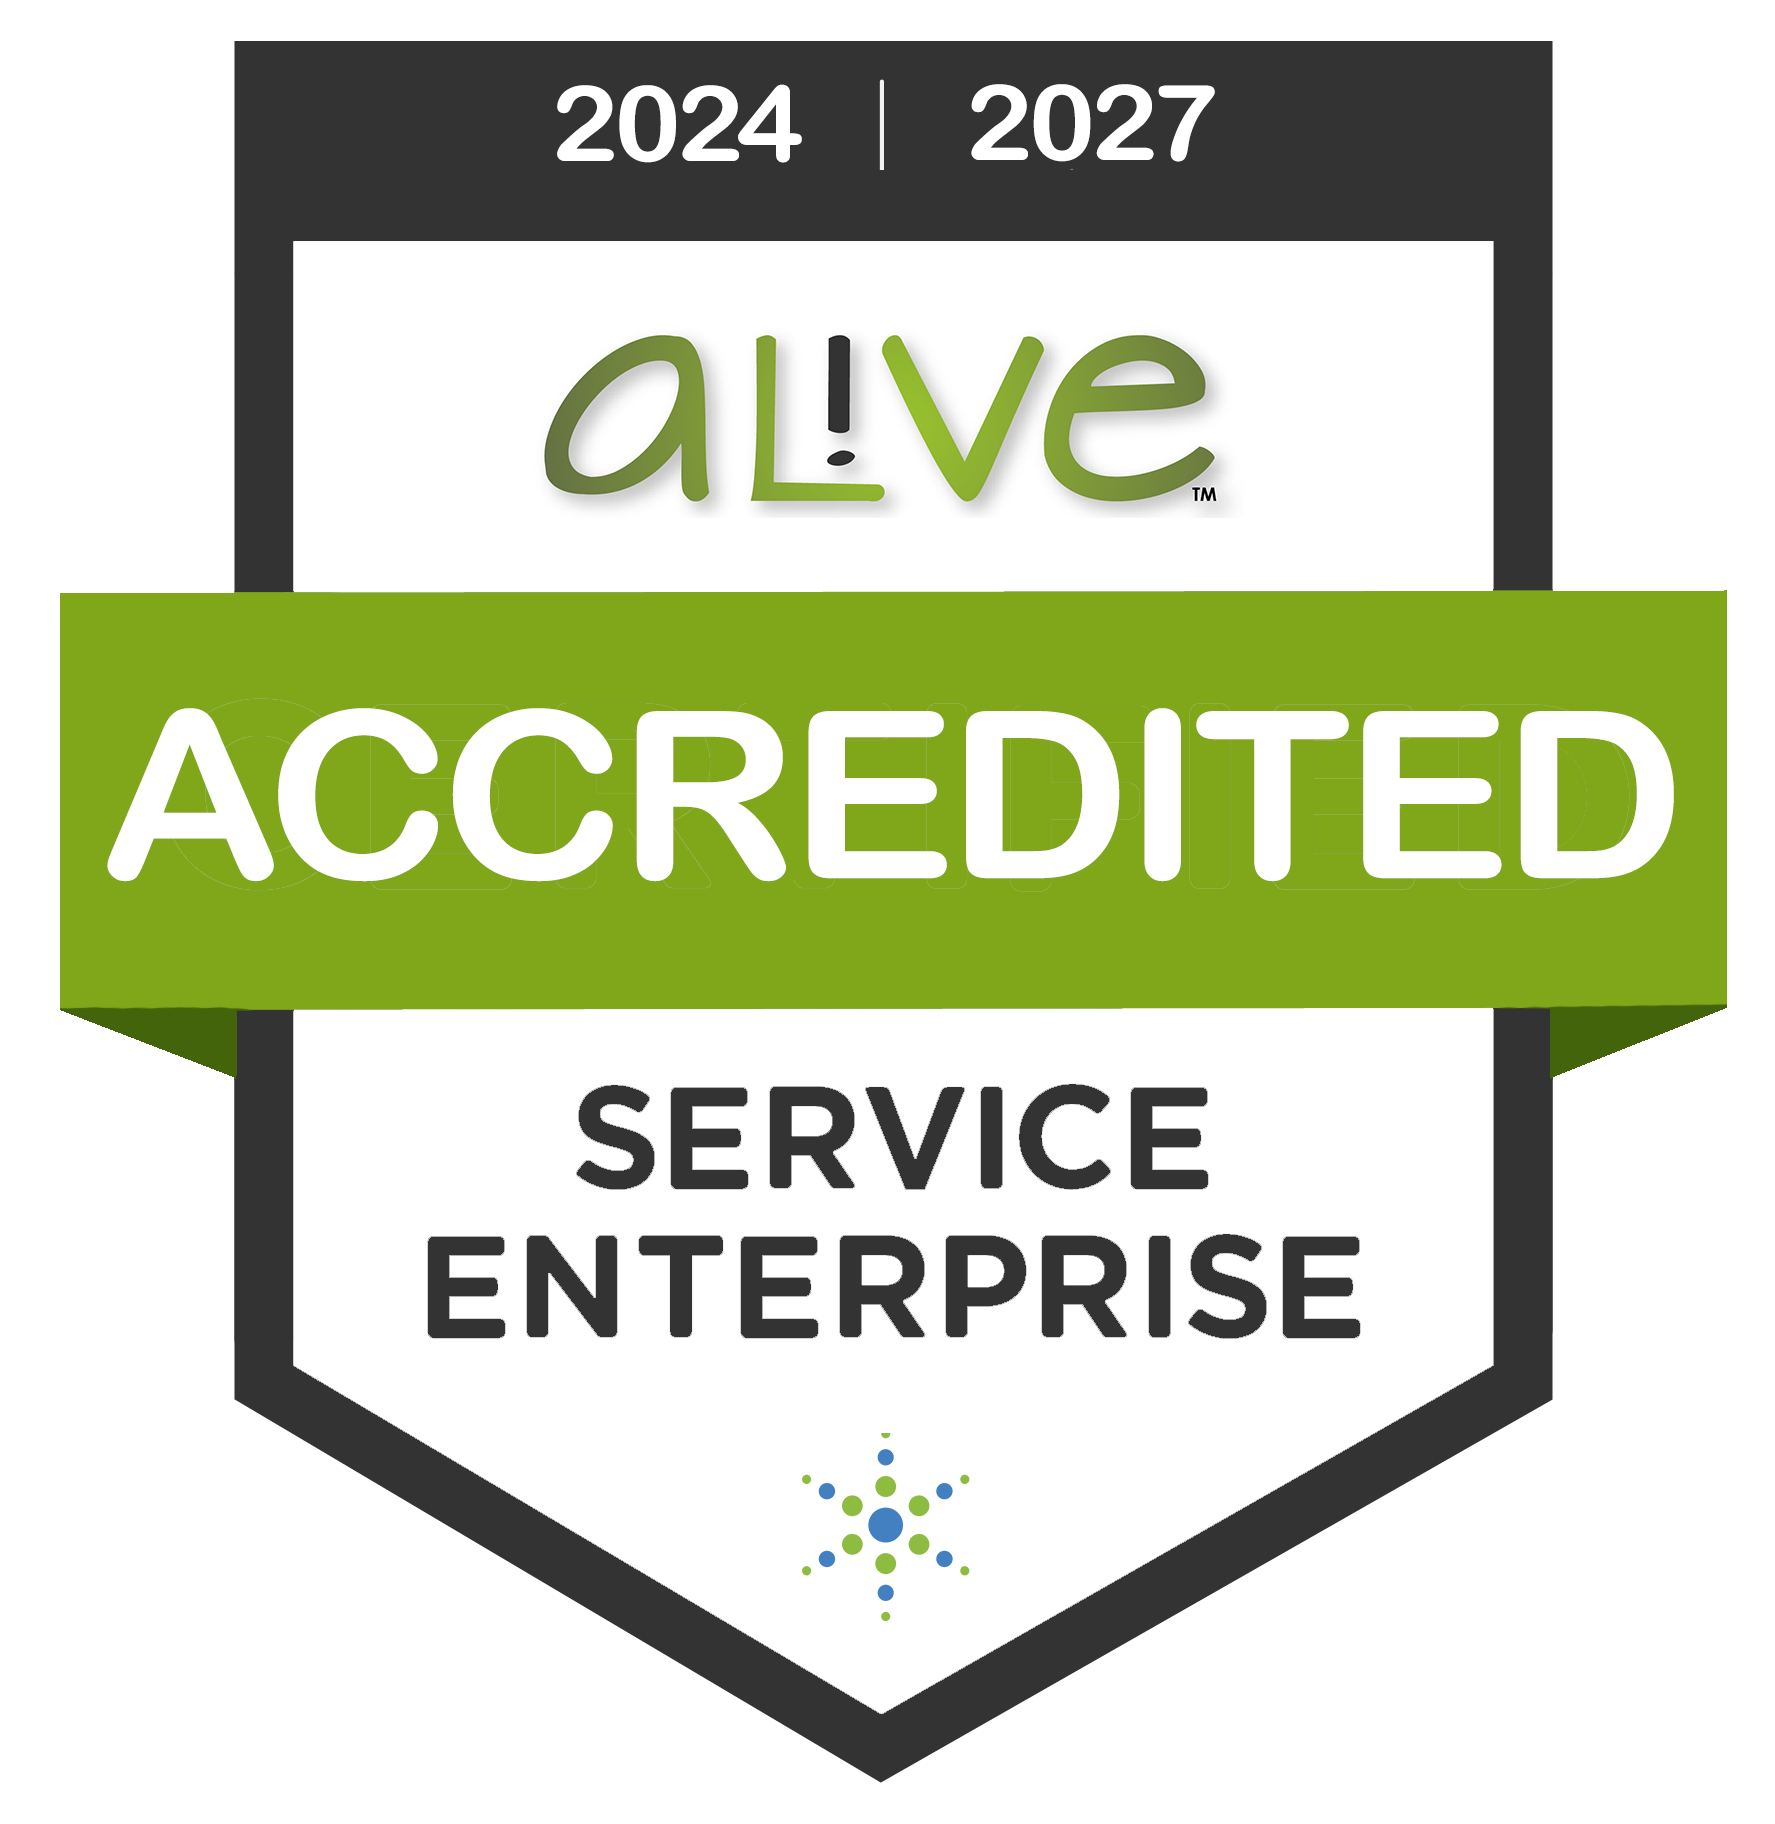 AL!ve Accredited Service Enterprise Seal 2024 - 2027